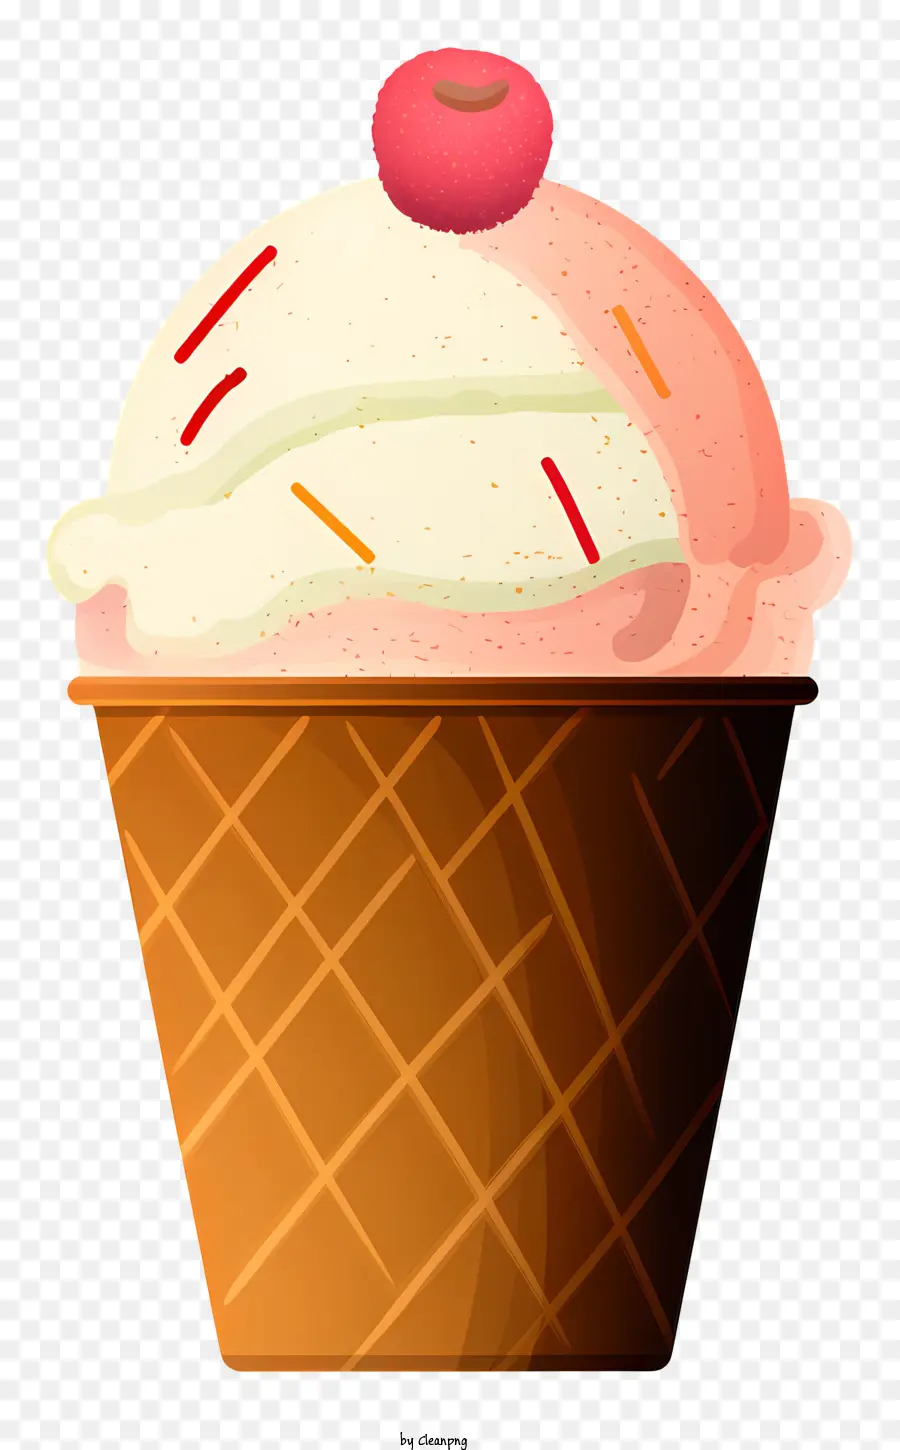 chocolate ice cream ice cream cone whipped cream cherry on top cone shape